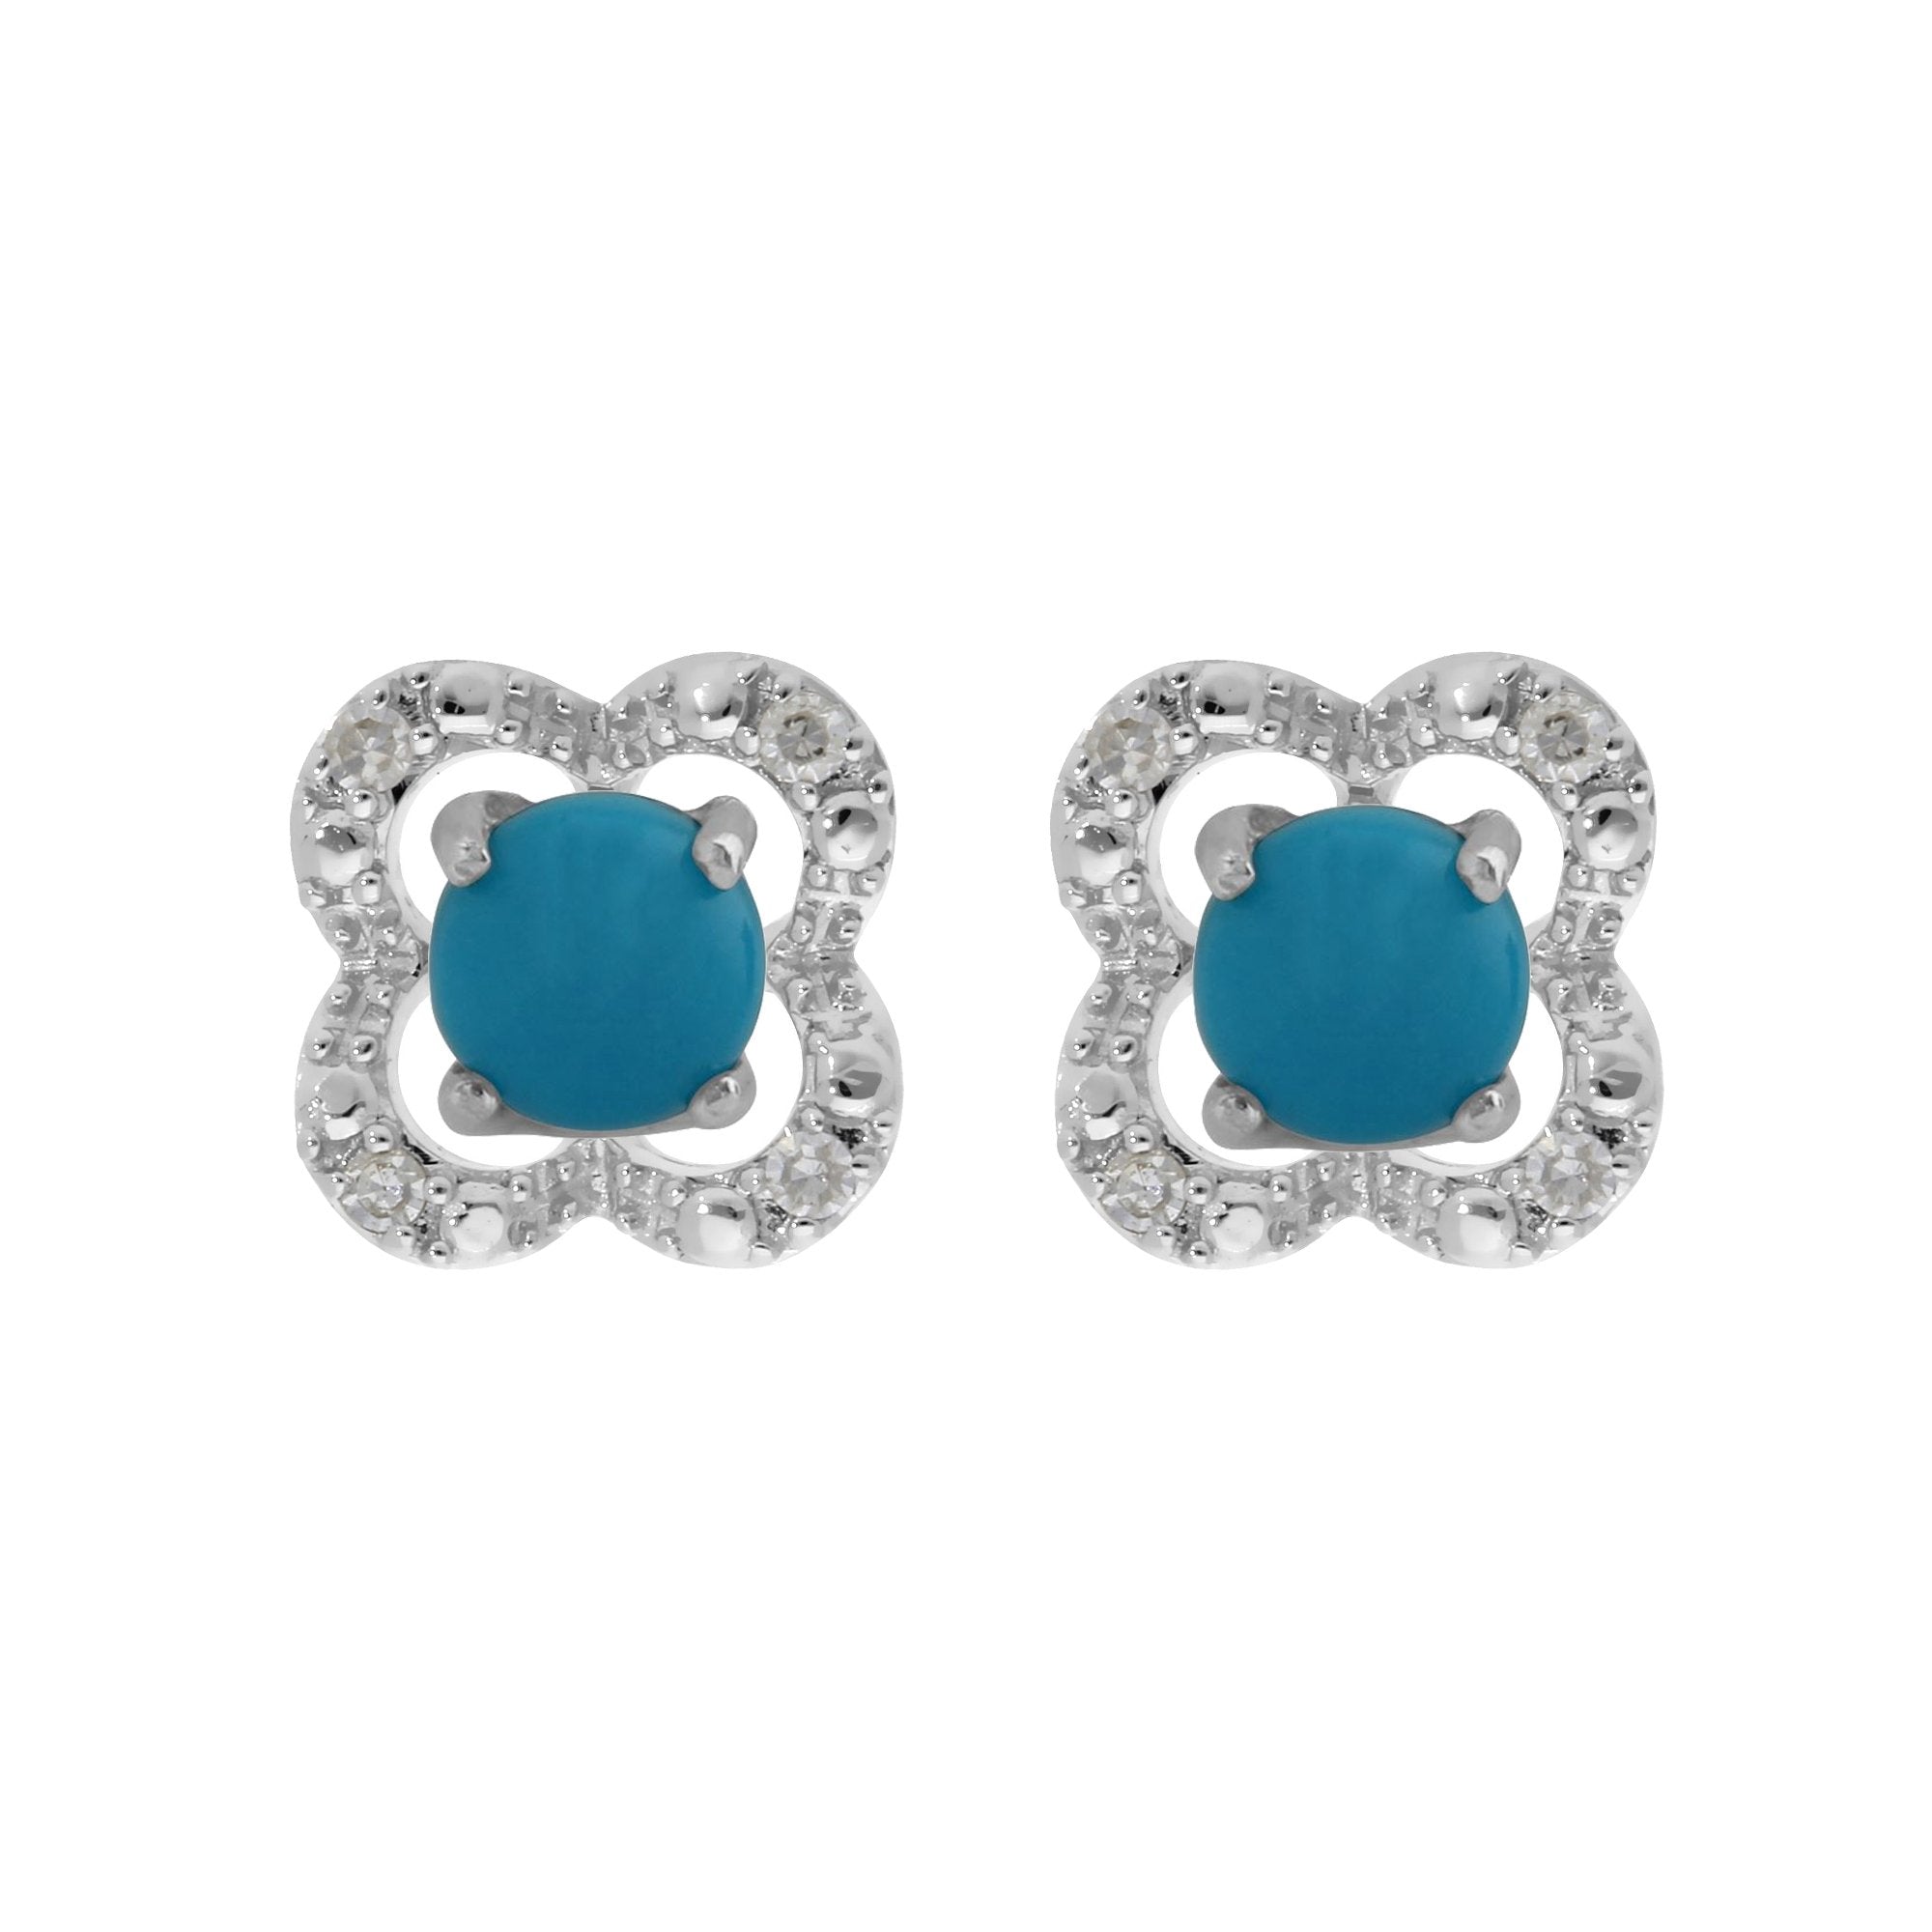 Classic Turquoise Stud Earrings & Diamond Flower Ear Jacket Image 1 